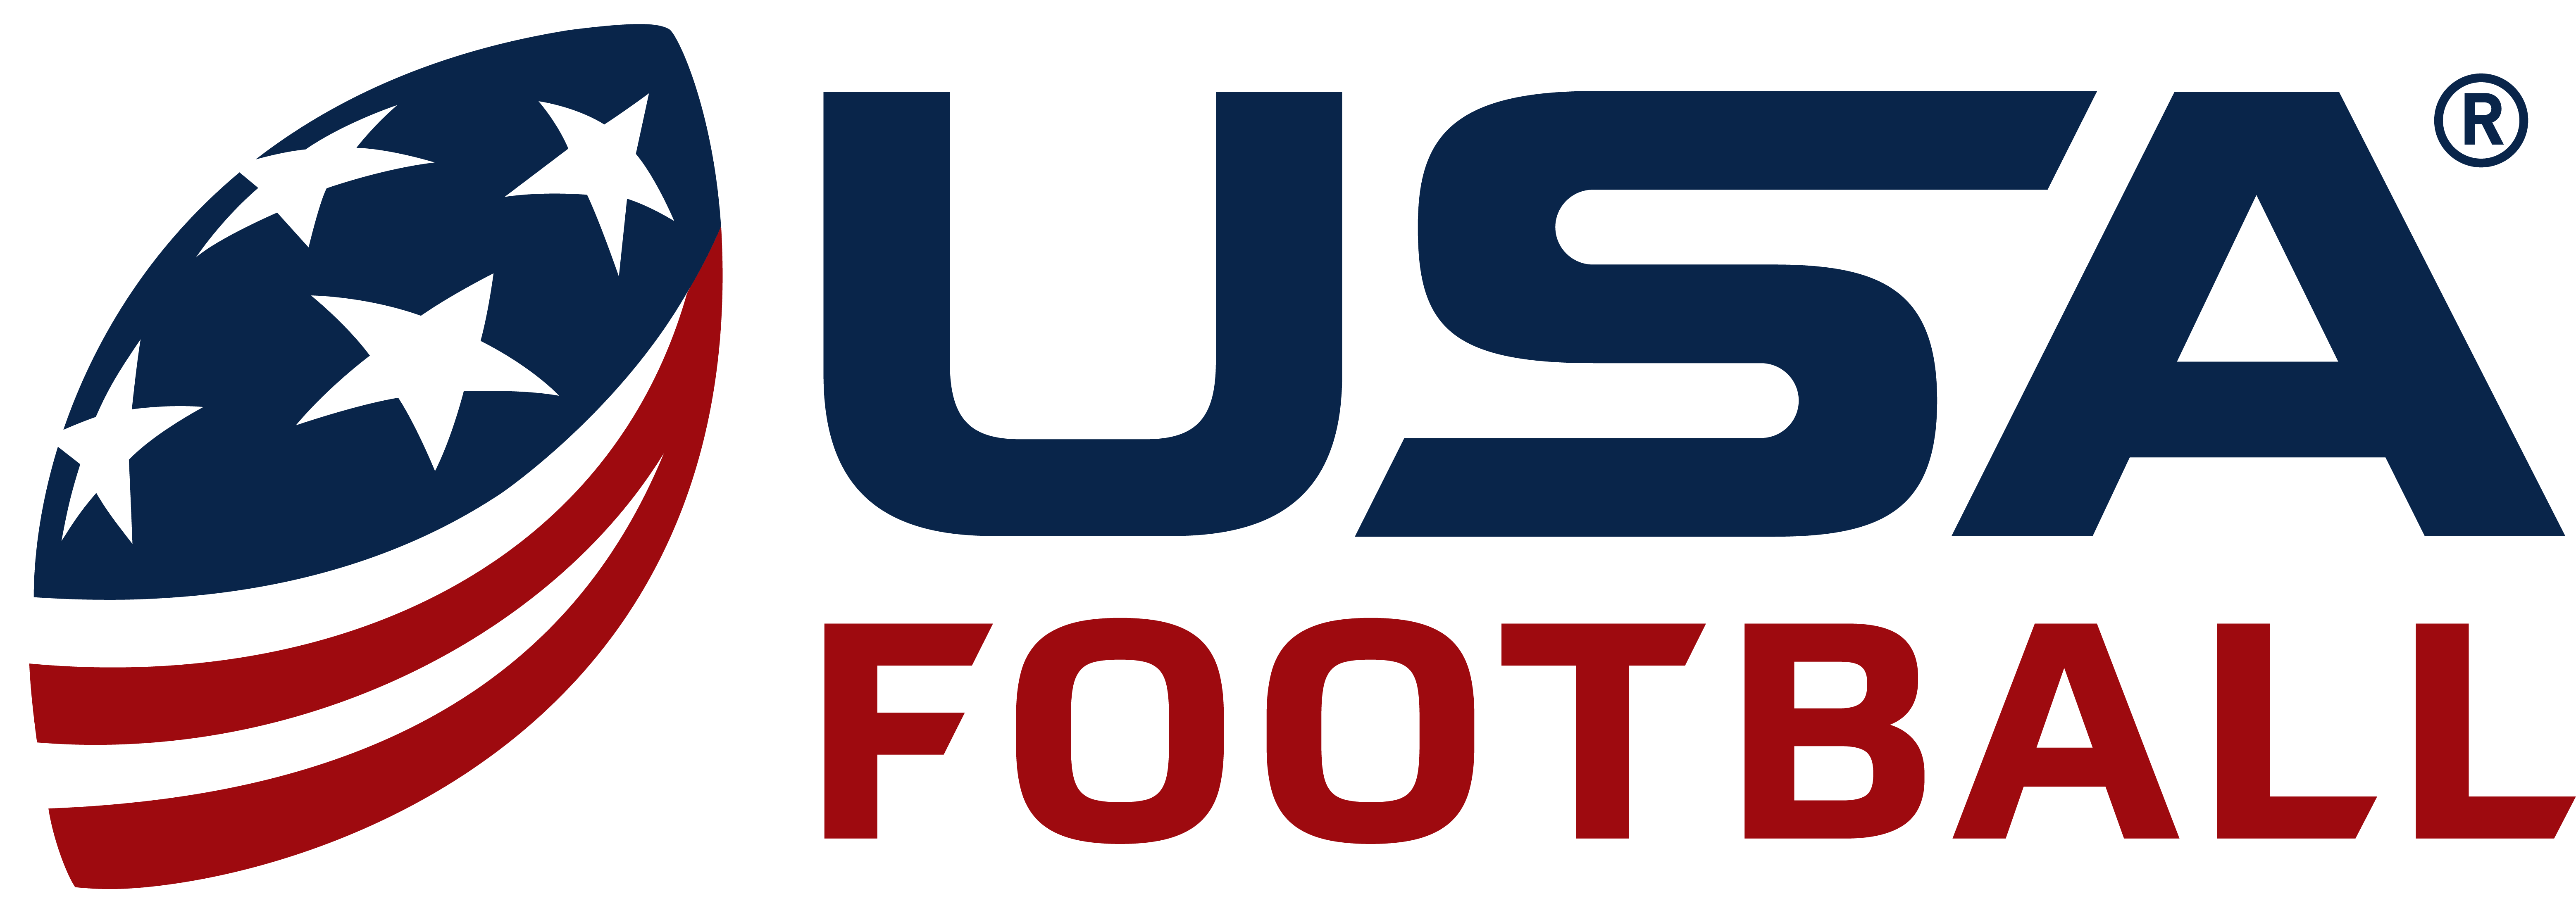 USAFB logo 3.8